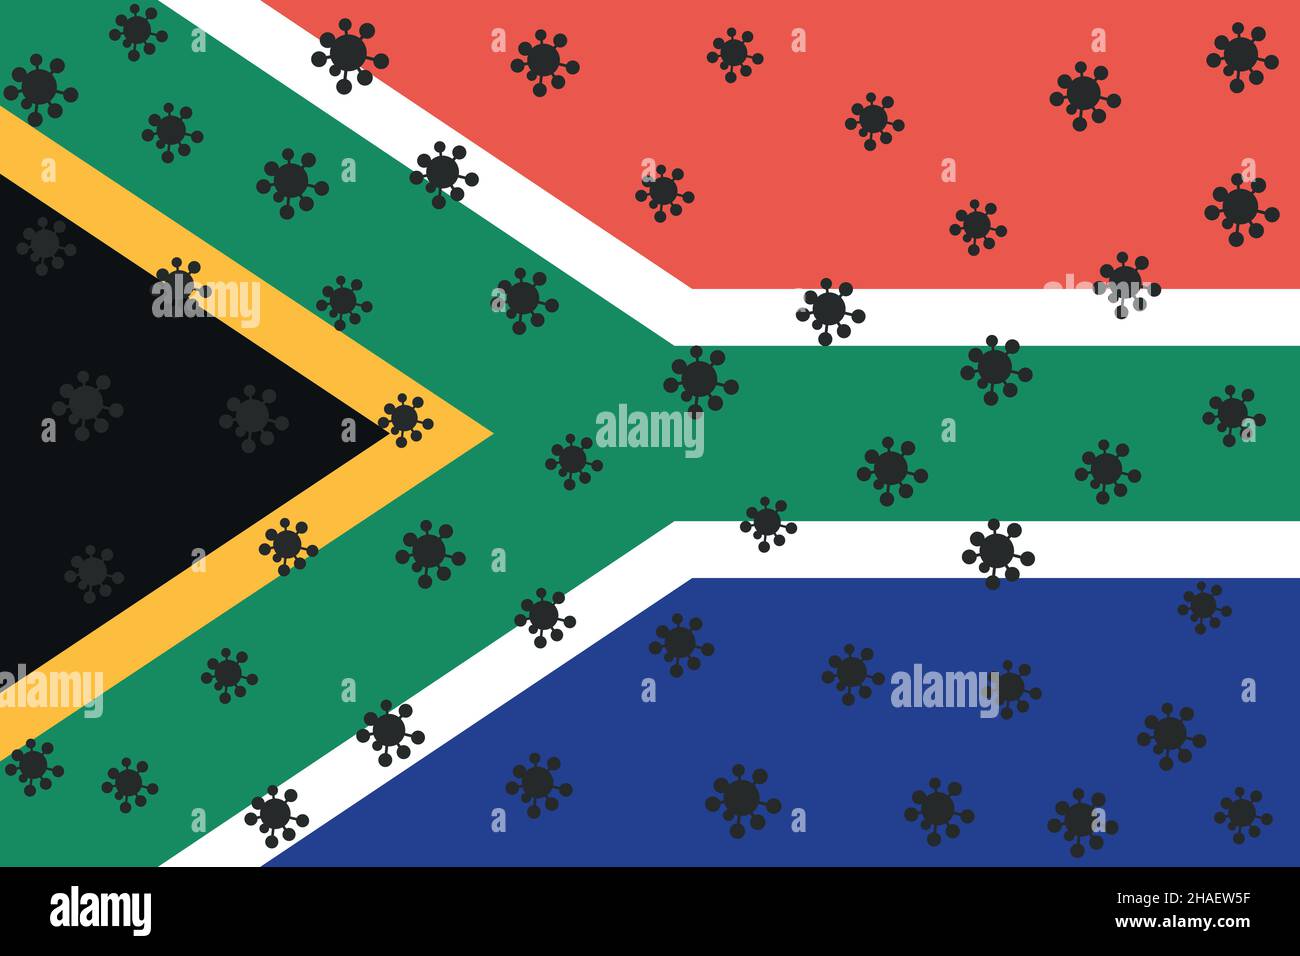 Virus cells illustration over south africa flag vector illustration. Covid coronavirus alert variation concept Stock Photo